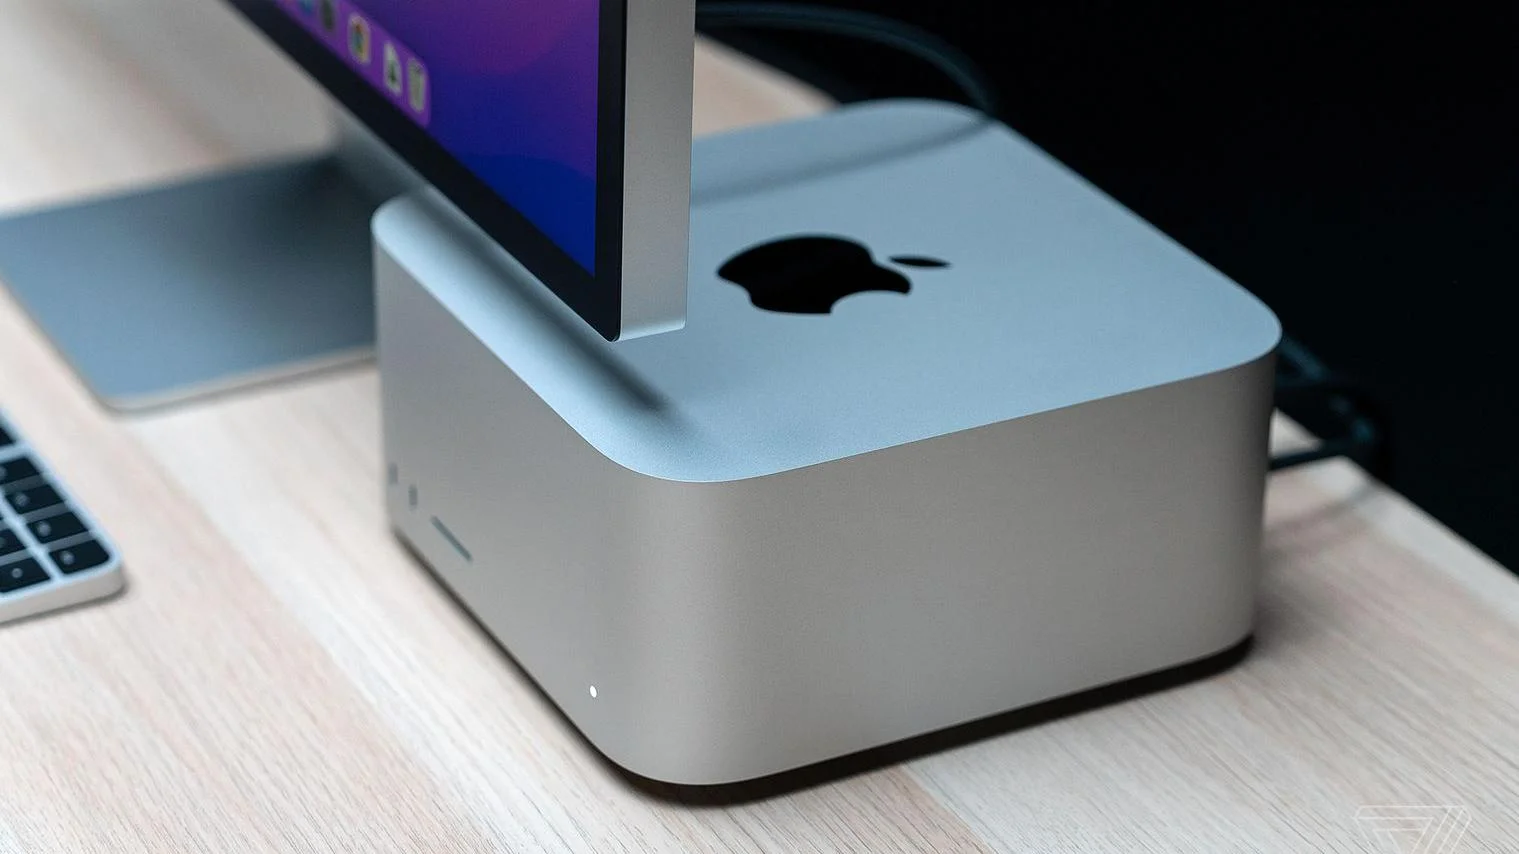 Tech blogger showed the insides of Apple Mac Studio